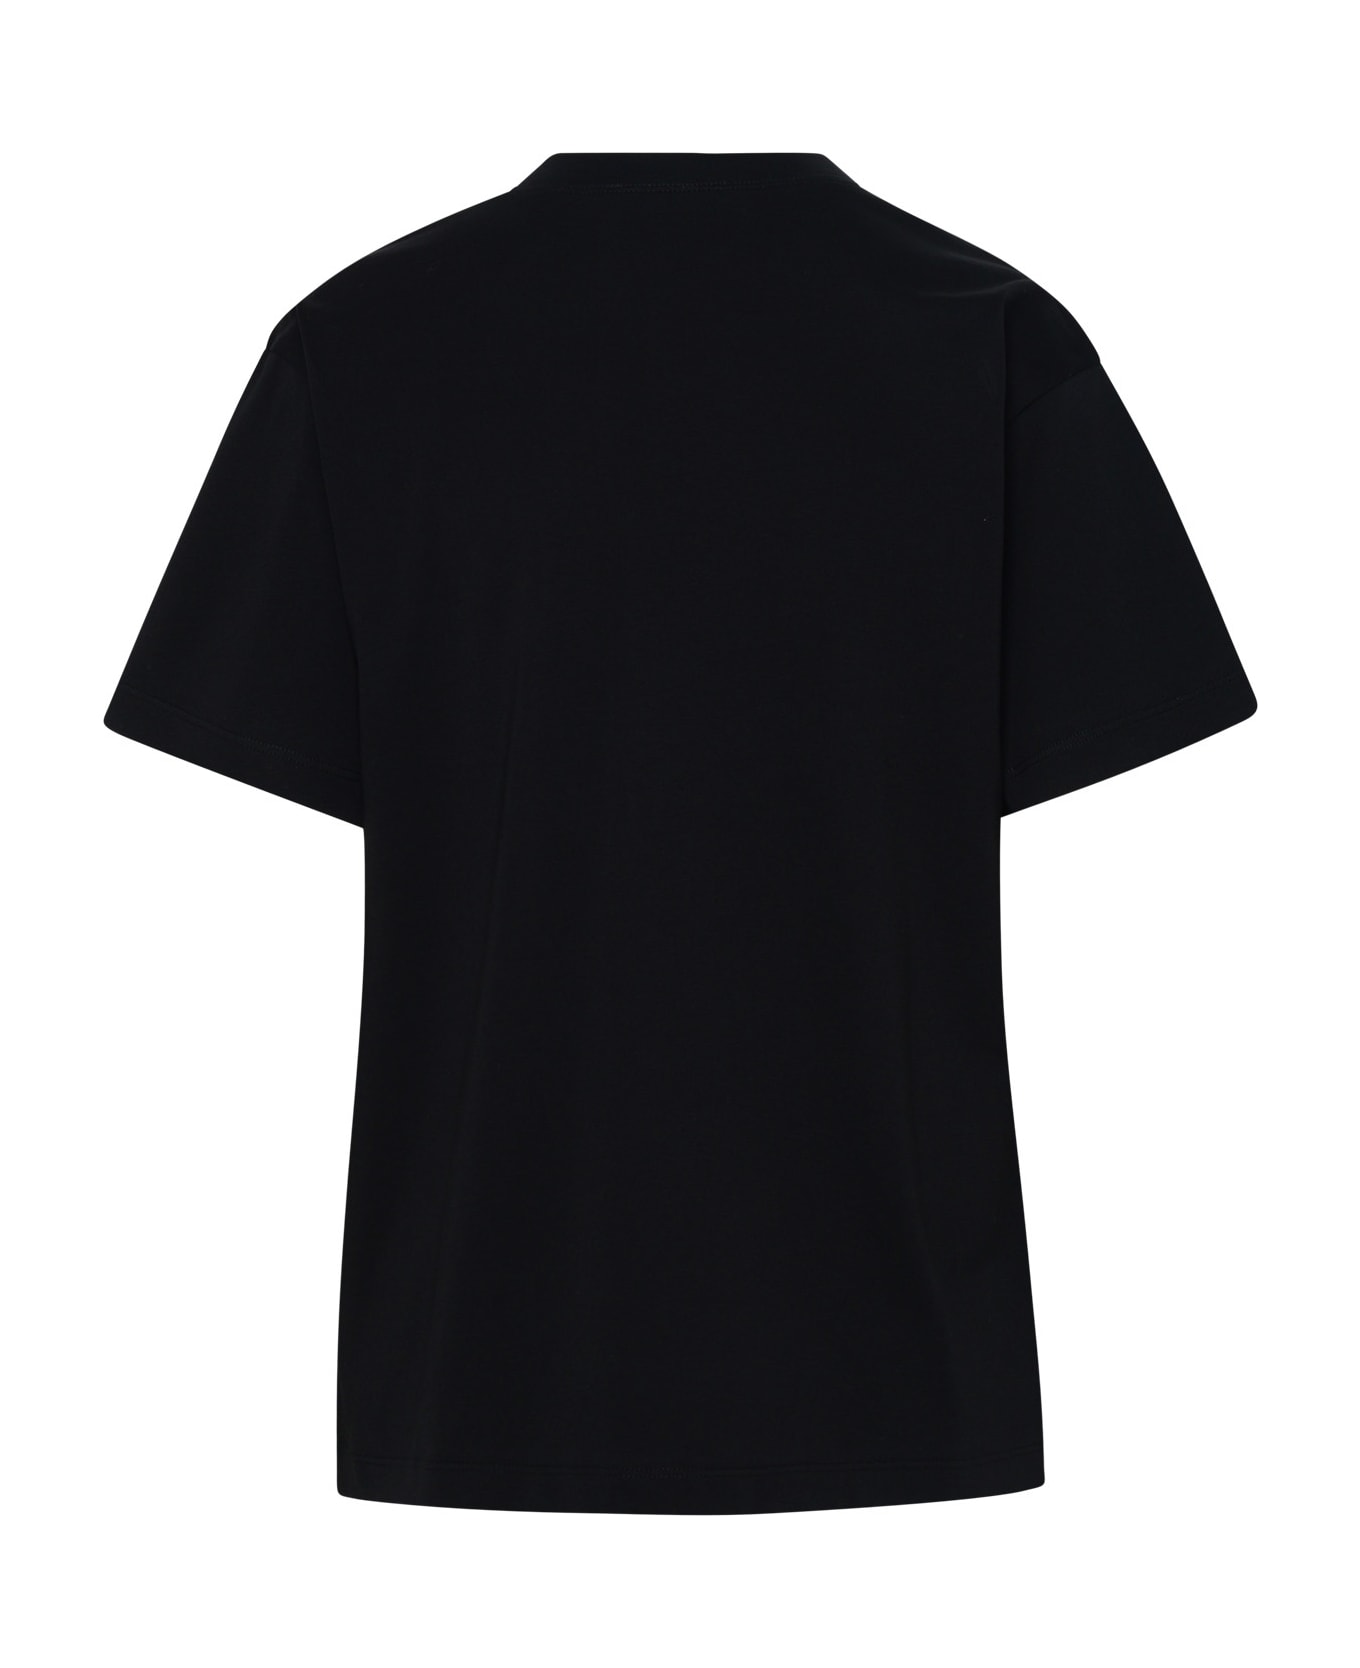 M05CH1N0 Jeans Black Cotton T-shirt - Black